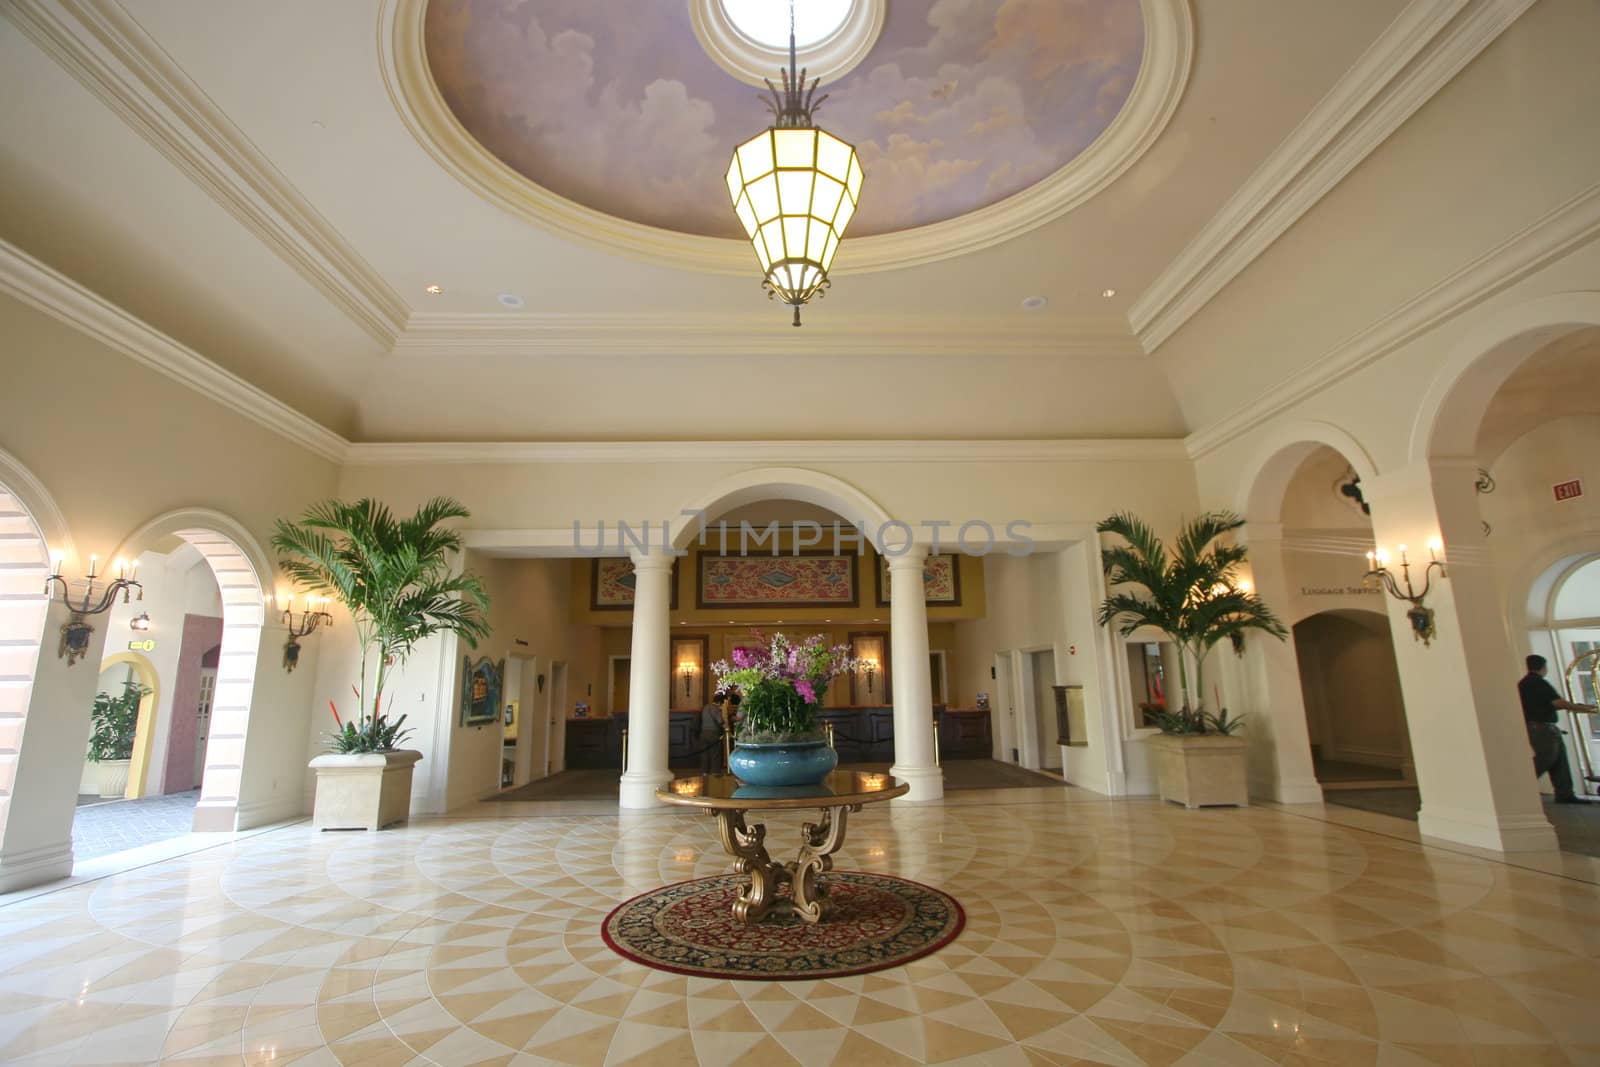 An interior of a hotel lobby with tile floor.